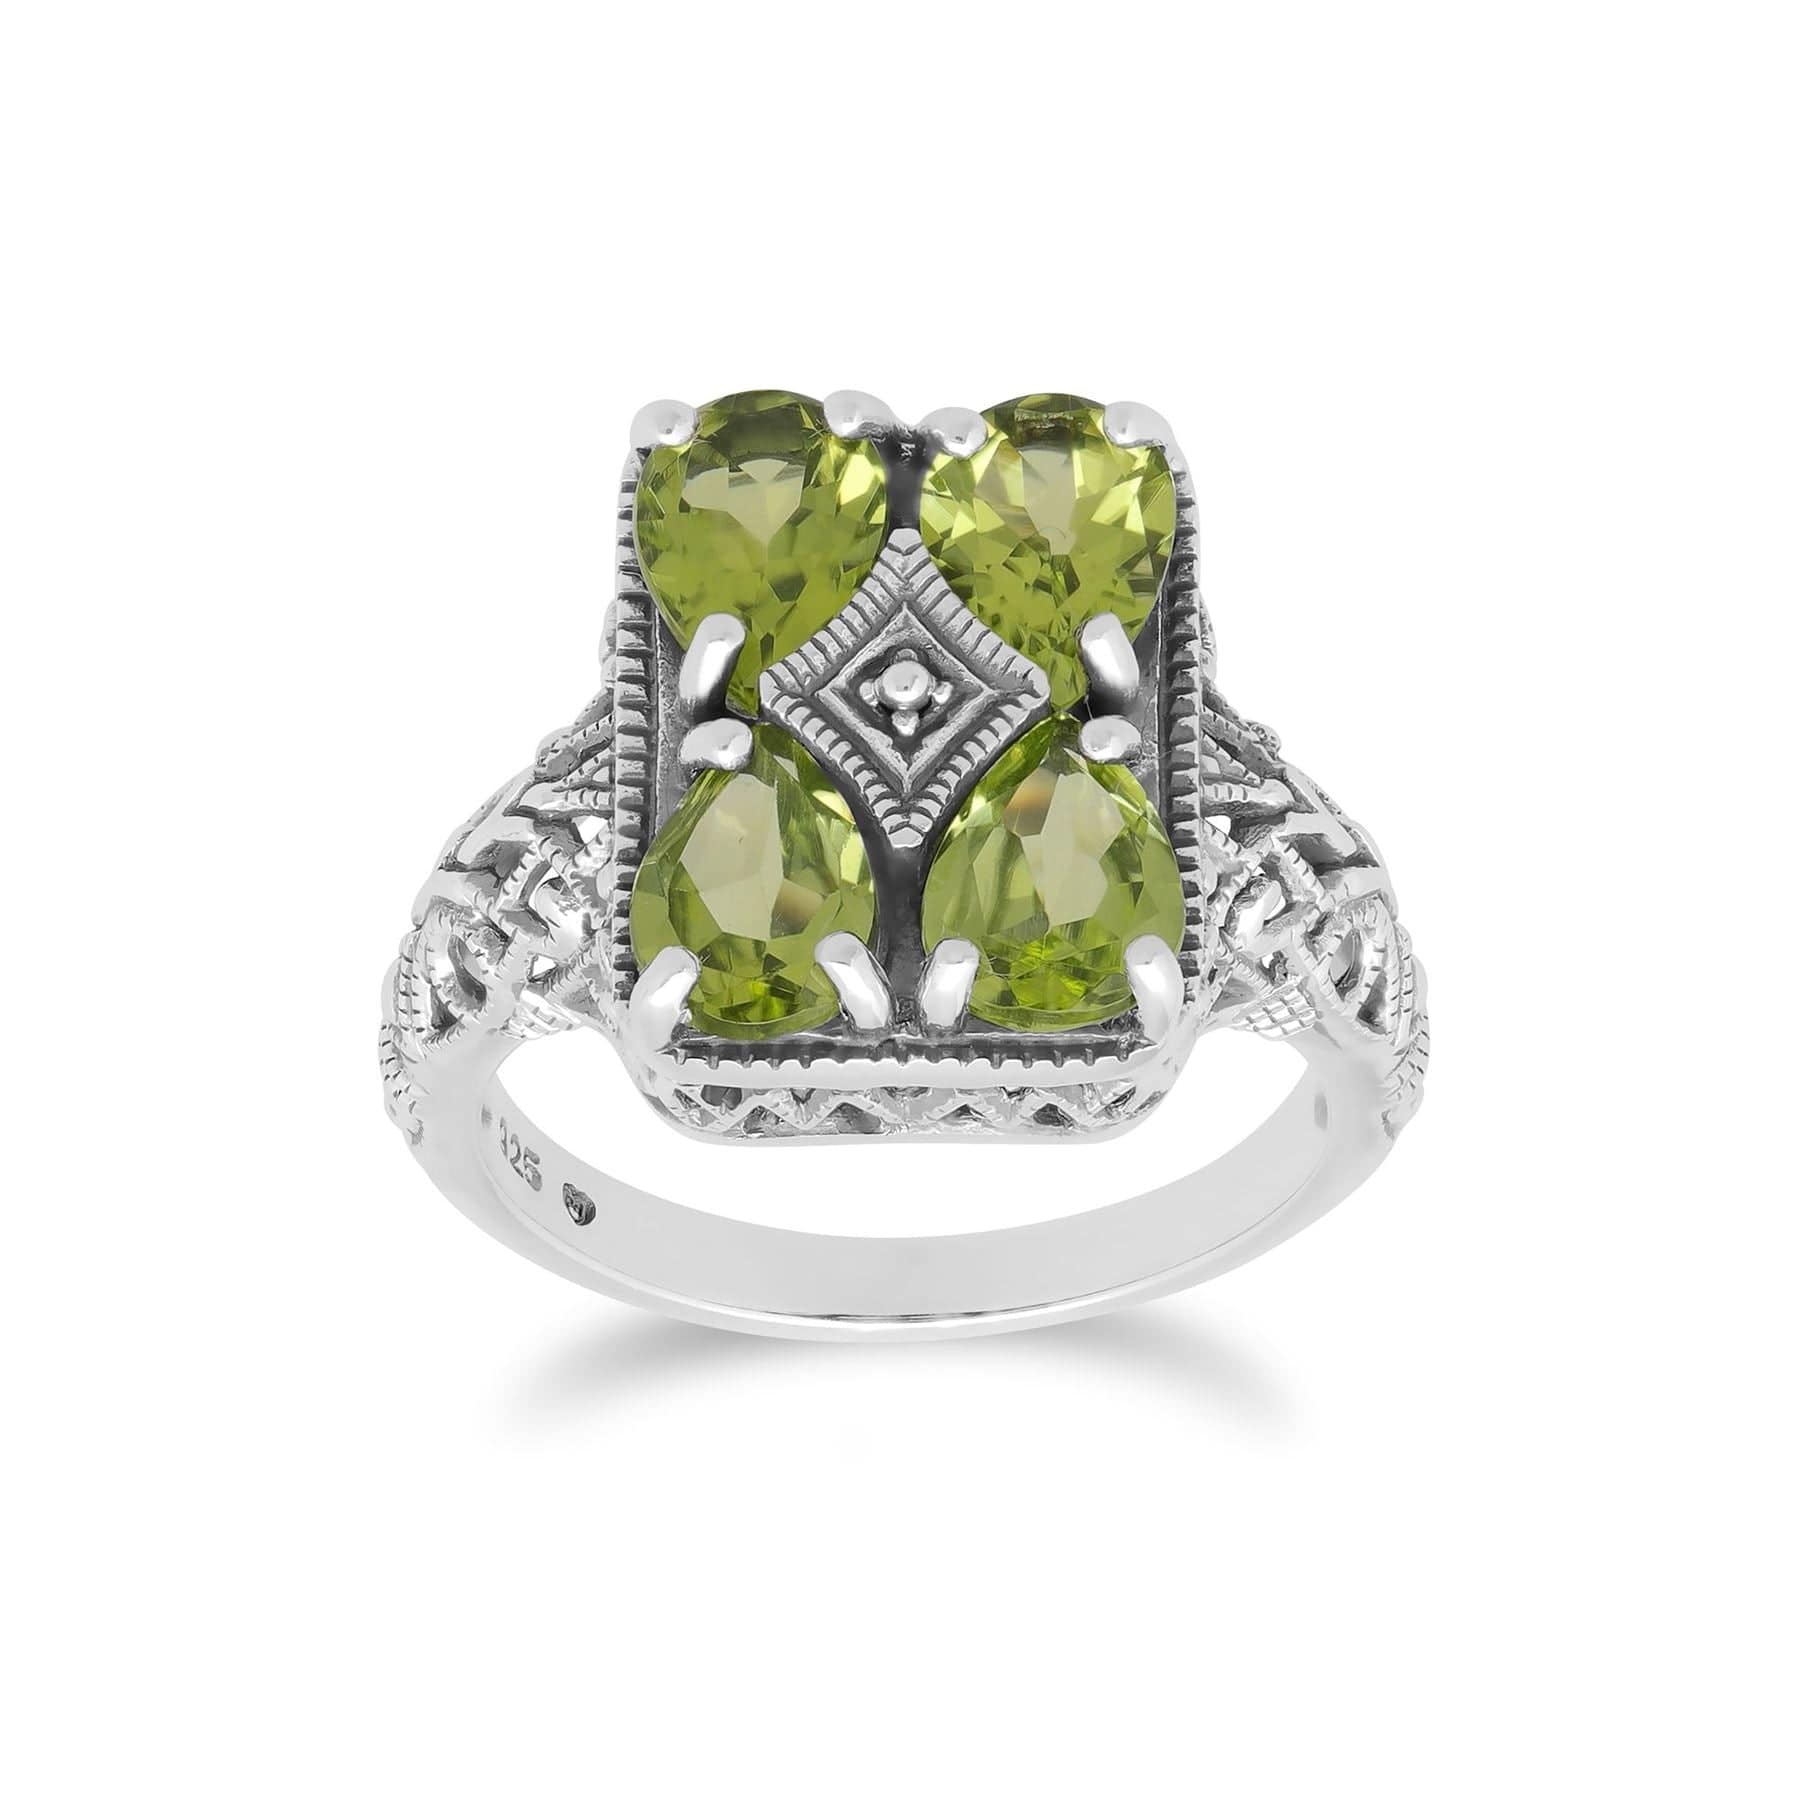 Art Nouveau Inspired Peridot Statement Ring in 925 Sterling Silver - Gemondo